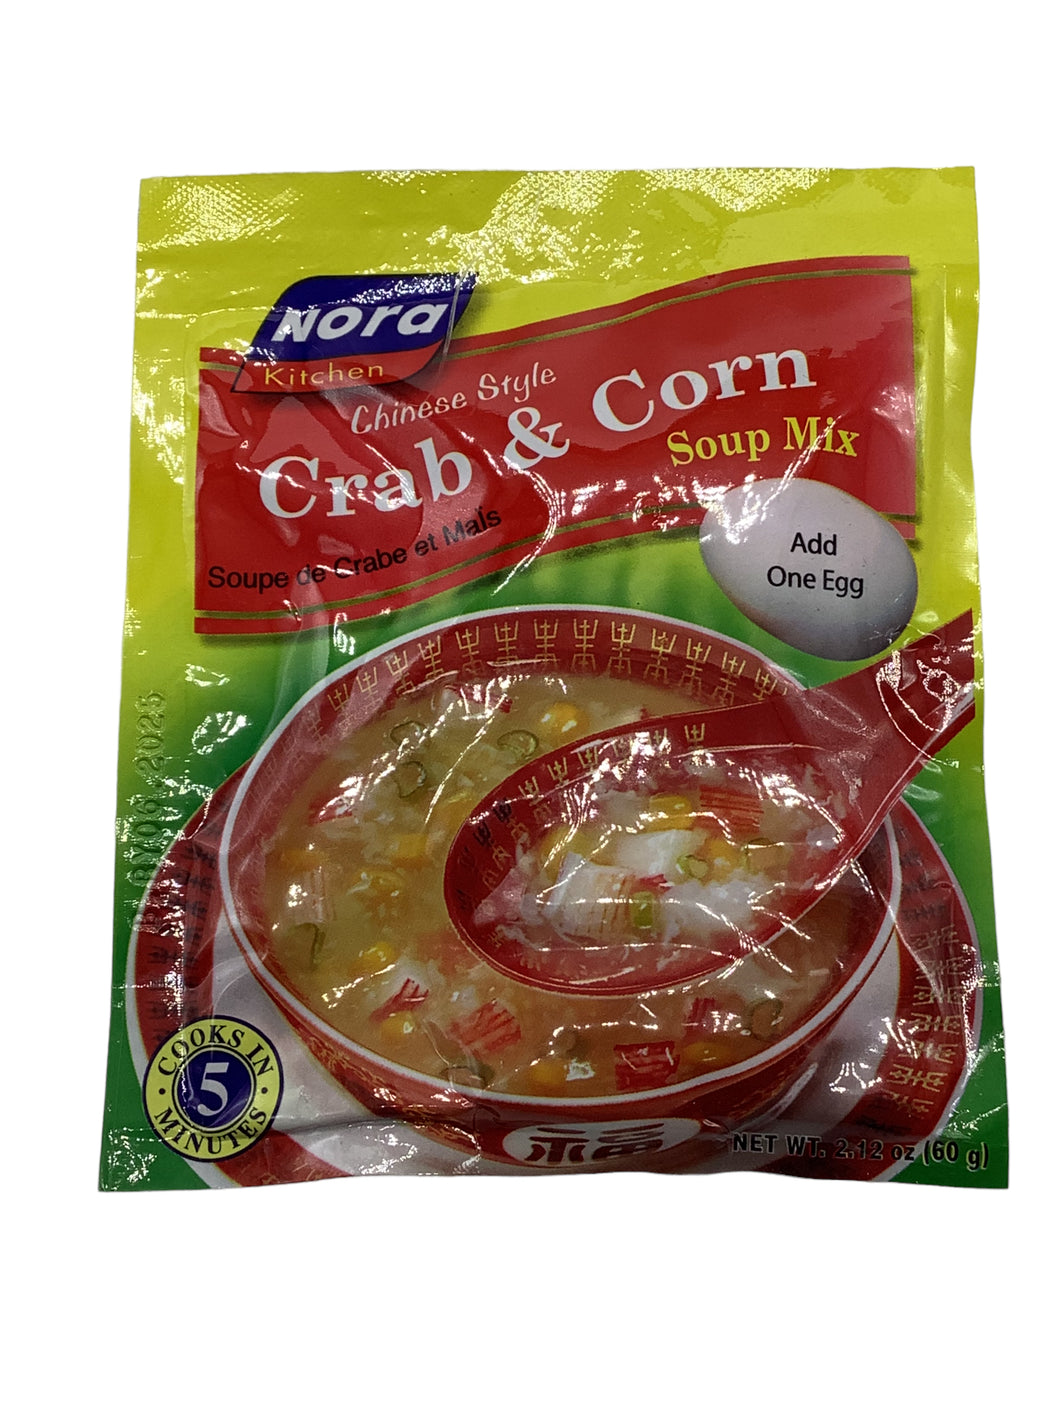 Nora Kitchen Chinese Style Crab & Corn Soup Mix